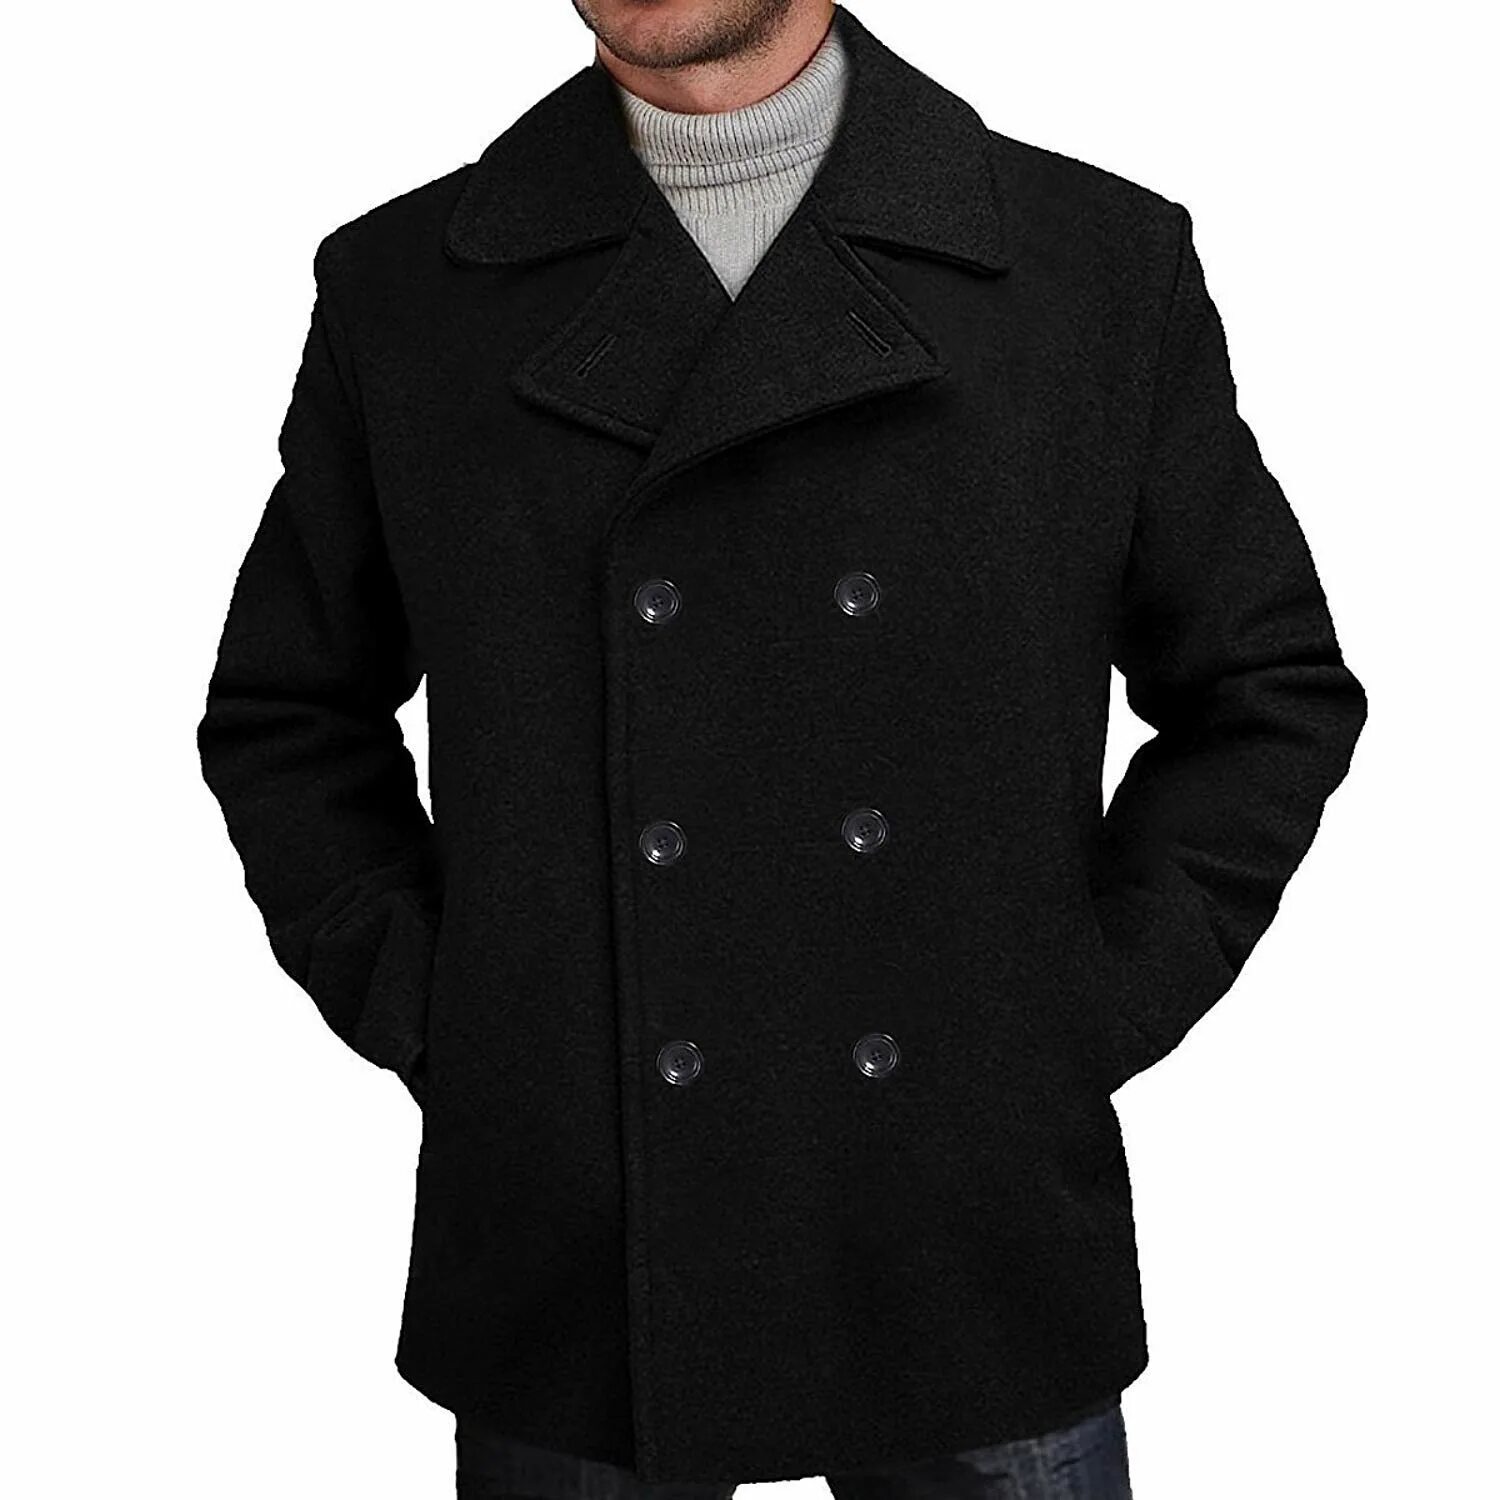 Wool Blend Coat пальто мужское\. Двубортное шерстяное пальто мужское Zara. Бушлат Pea Coat. Пальто бушлат HM.